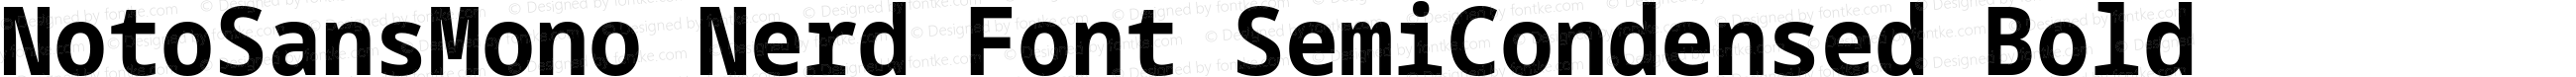 Noto Sans Mono SemiCondensed Bold Nerd Font Complete